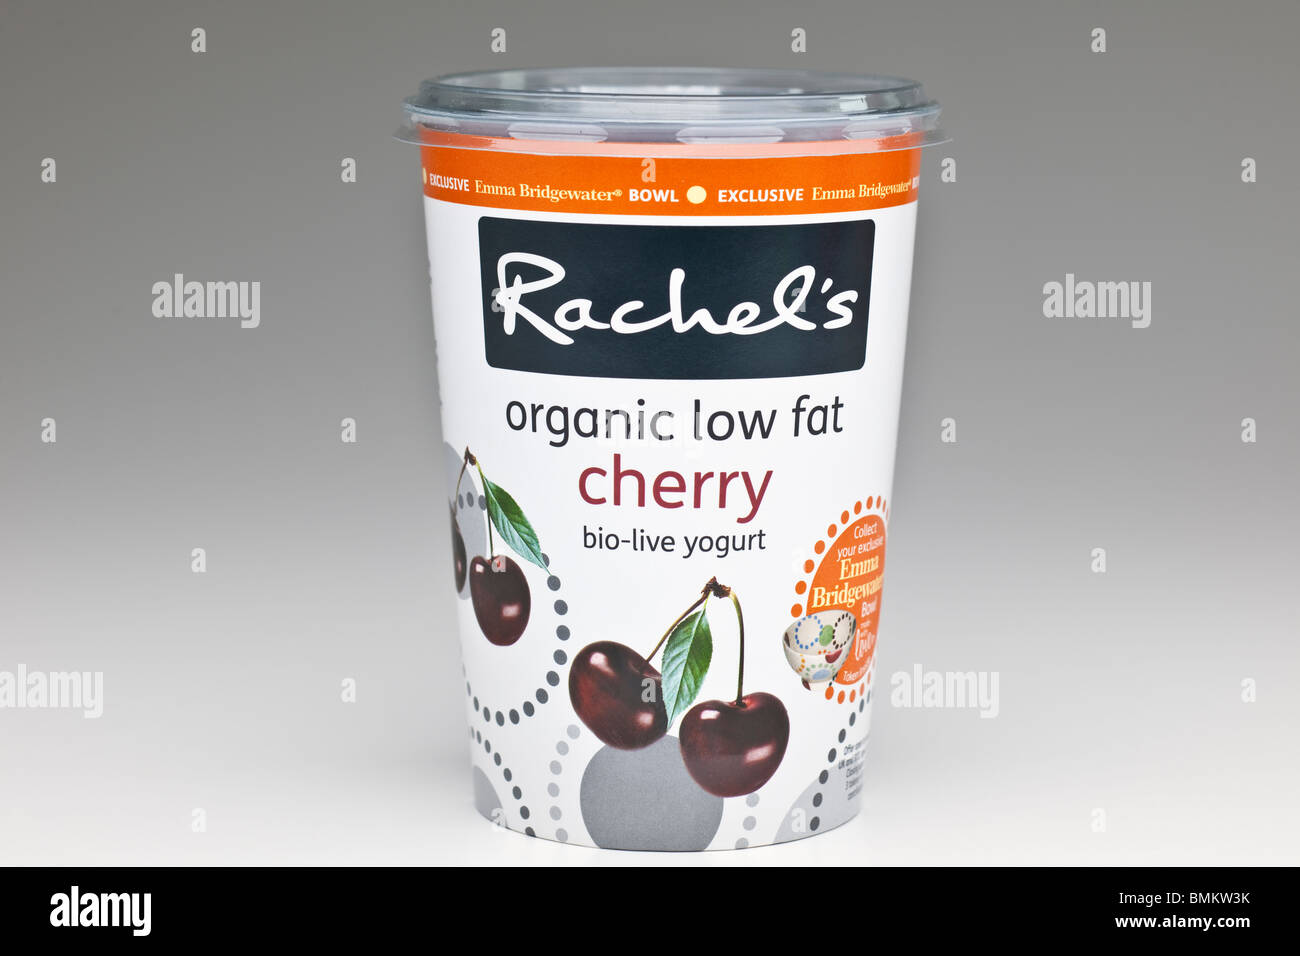 Carton of Rachels organic low fat cherry bio-live yogurt Stock Photo